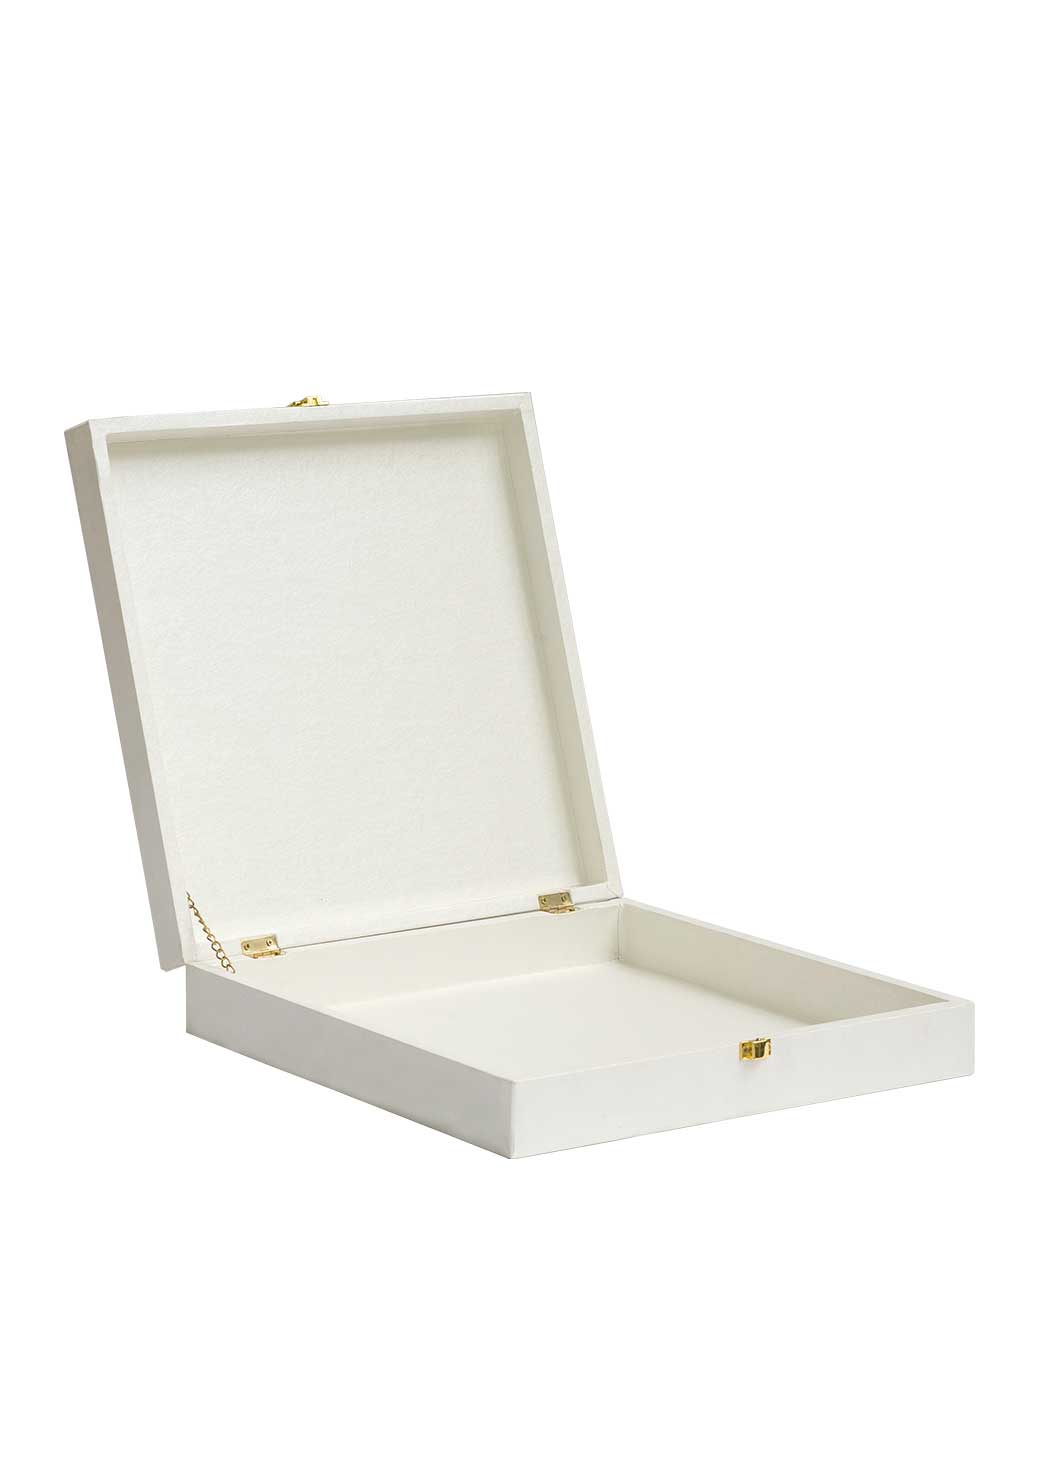 Premium Wooden Box | Square Shape Wooden Box | Wedding Set Box | Dowry Jewellery Boxes | Mou Dikhai Box | Gluband Set Wooden Box | Clothe Box